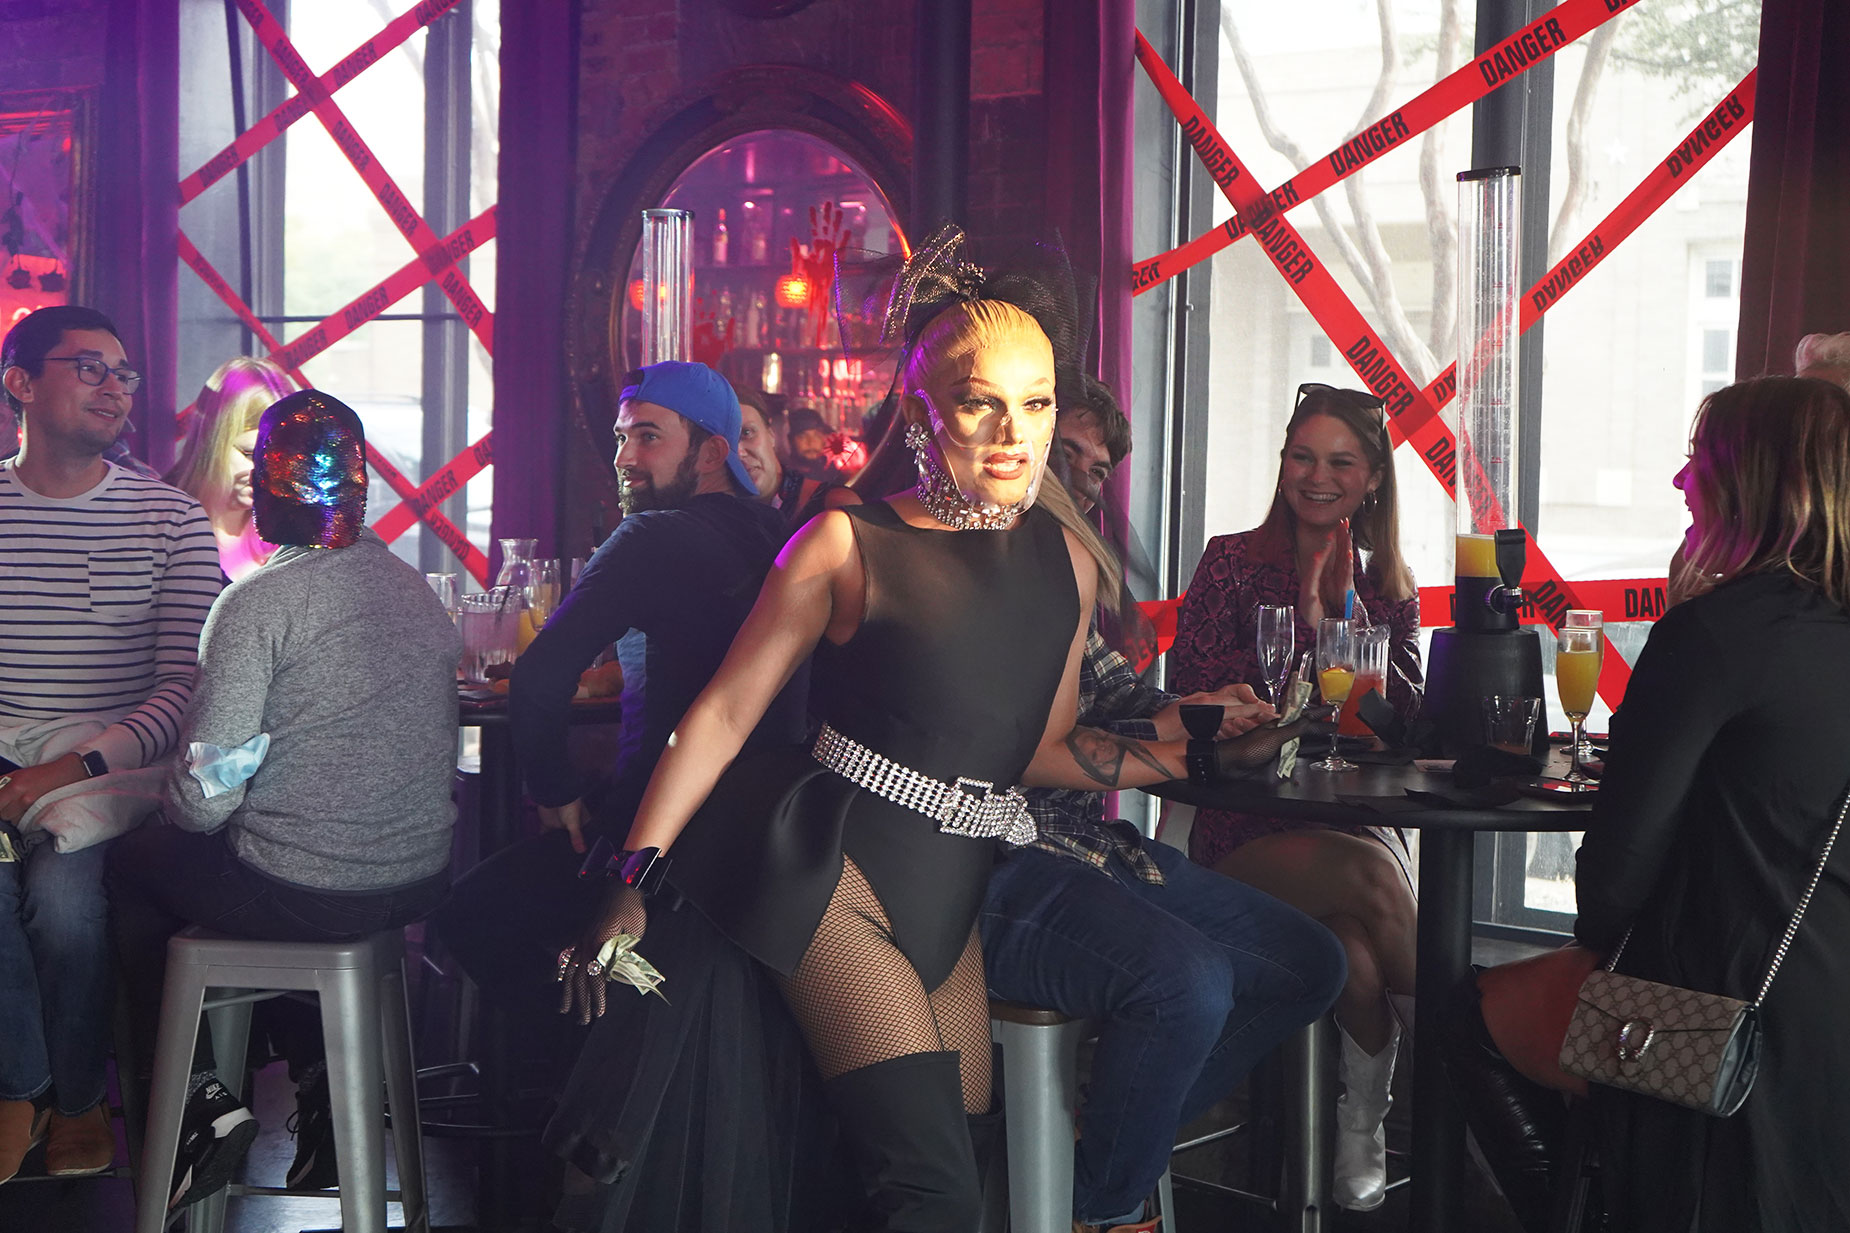 Dallas drag queen Serene Storm performing at brunch.